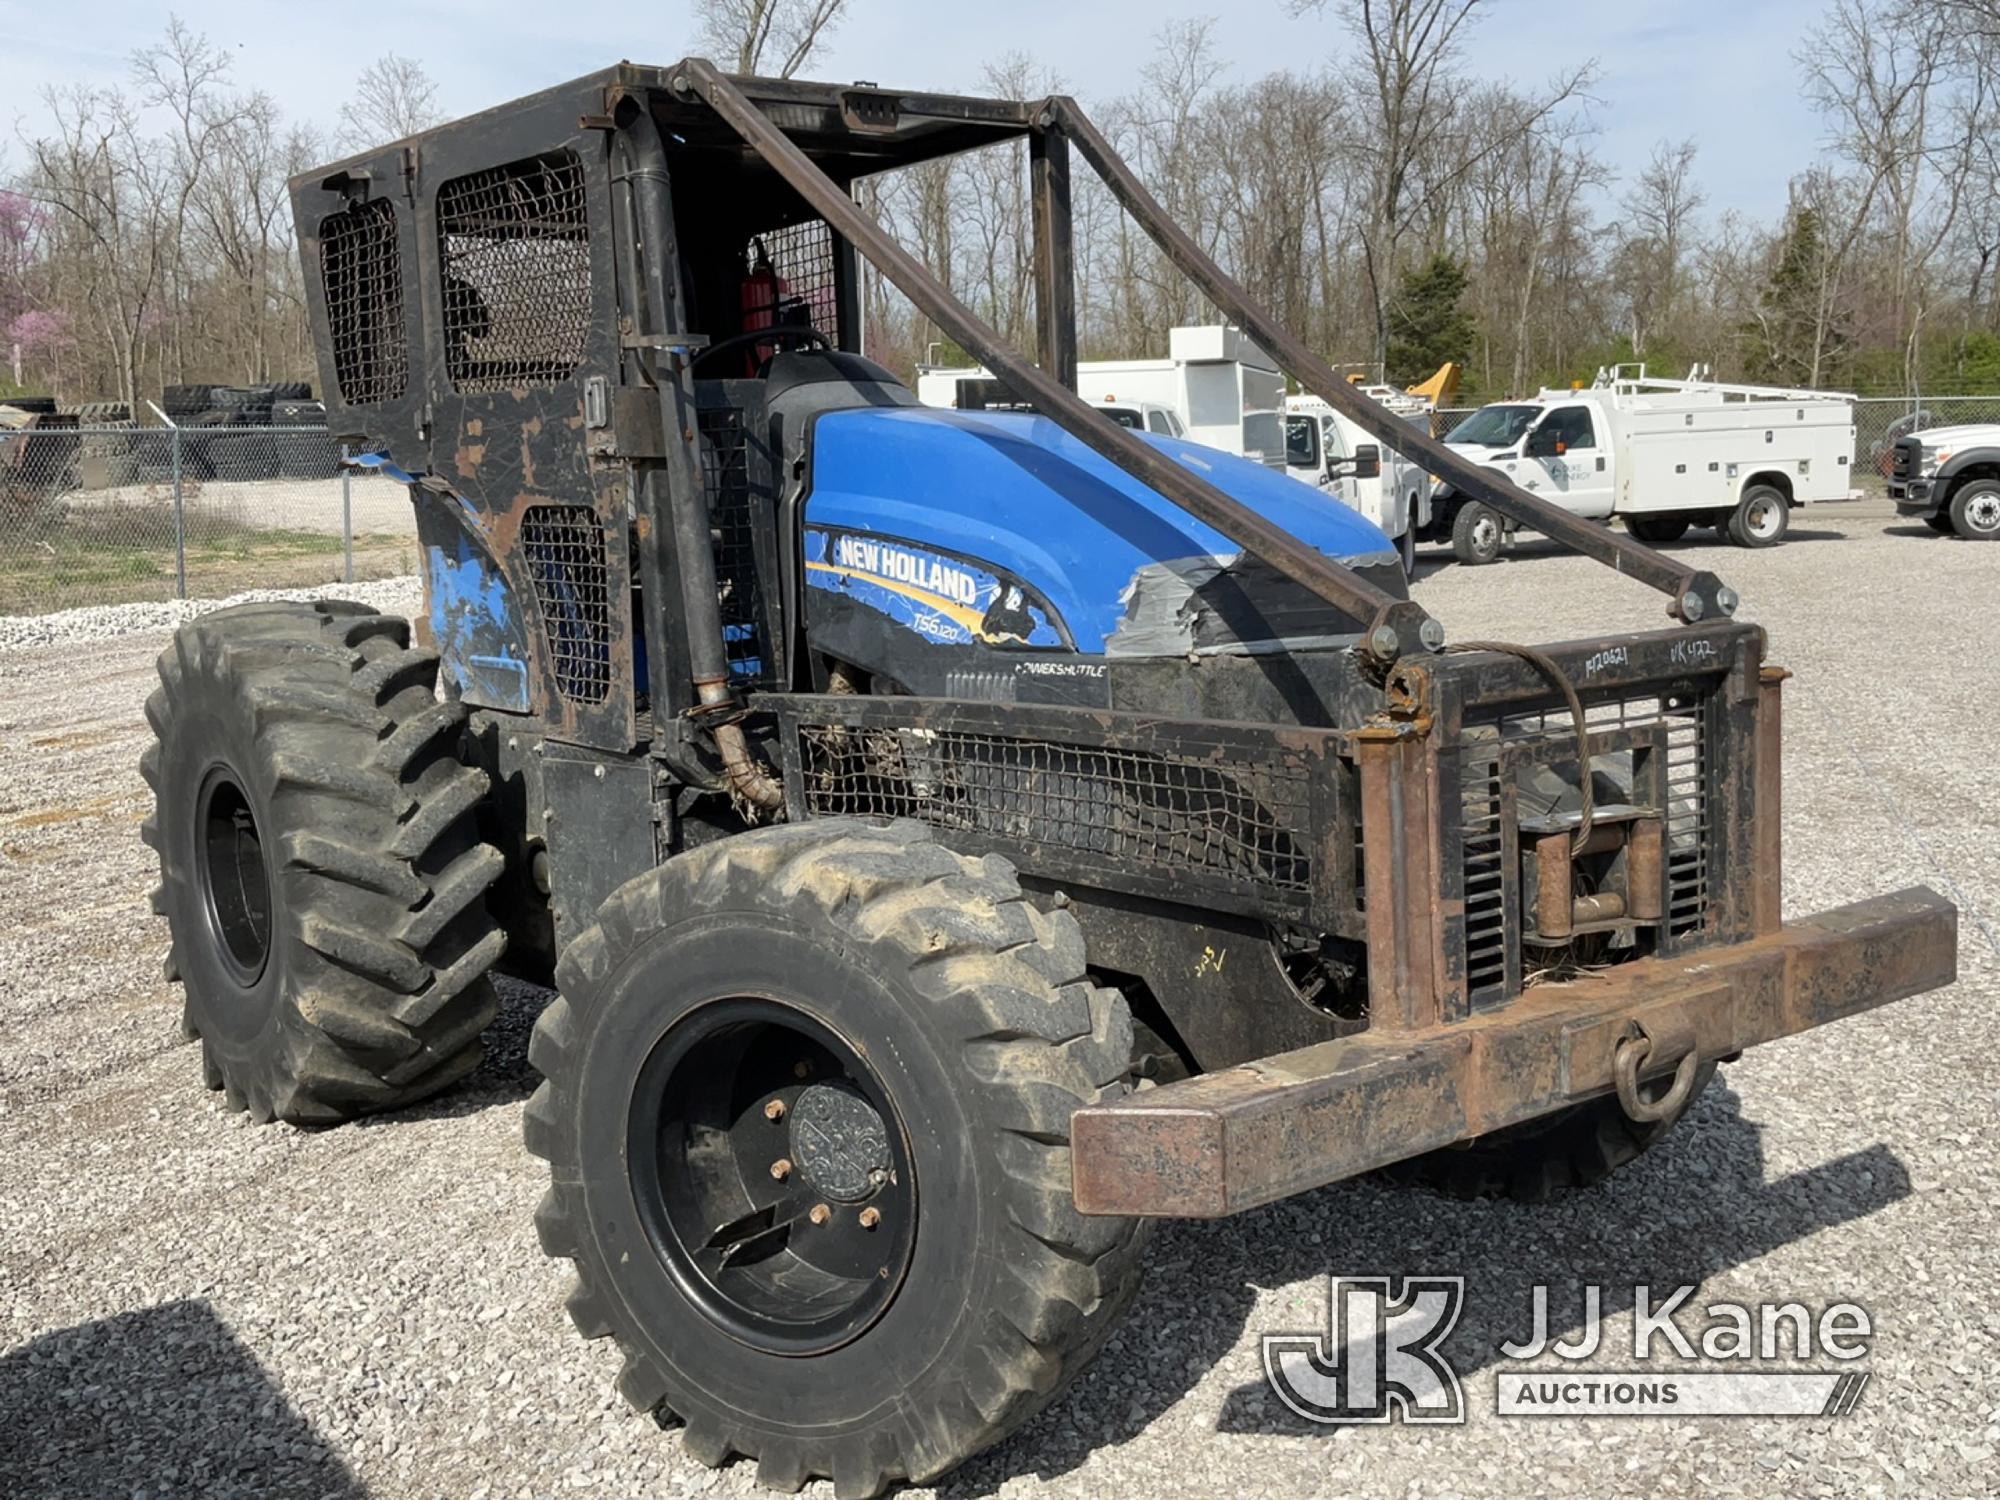 (Verona, KY) New Holland TS6.120 Utility Tractor Runs & Moves) (Body Damage, Driver Door Missing